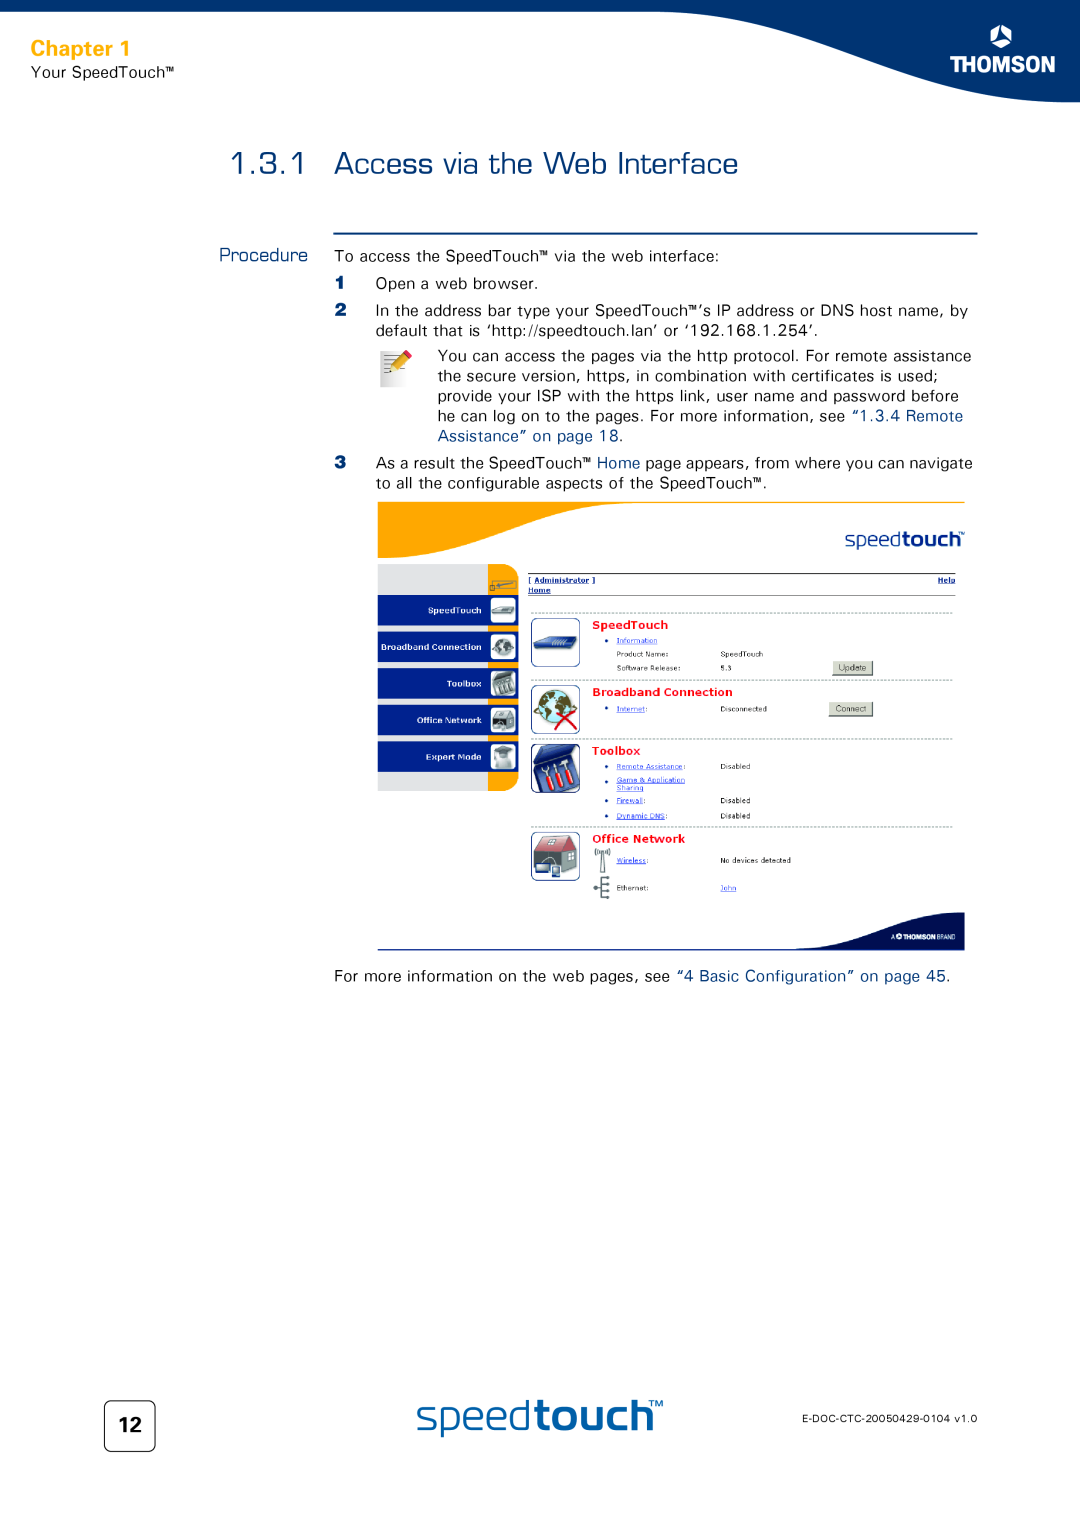 Technicolor - Thomson 608 WL, 620, 605 manual Access via the Web Interface, Chapter 